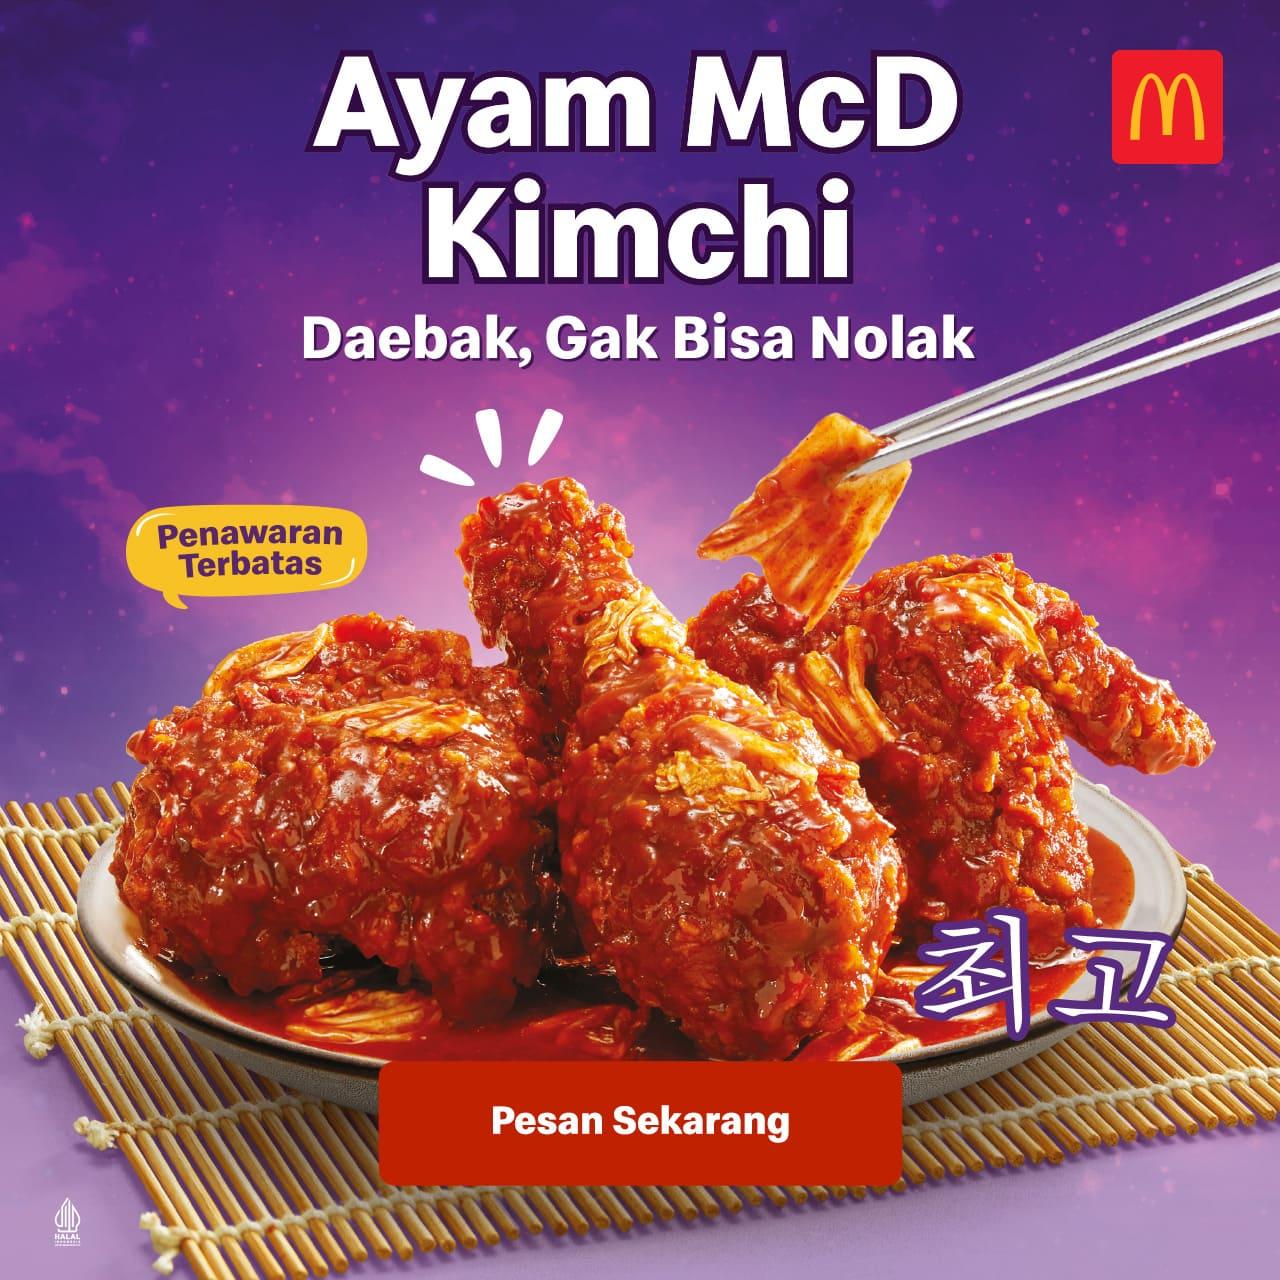 BARU! Ayam Kimchi MCD dari McDonald’s